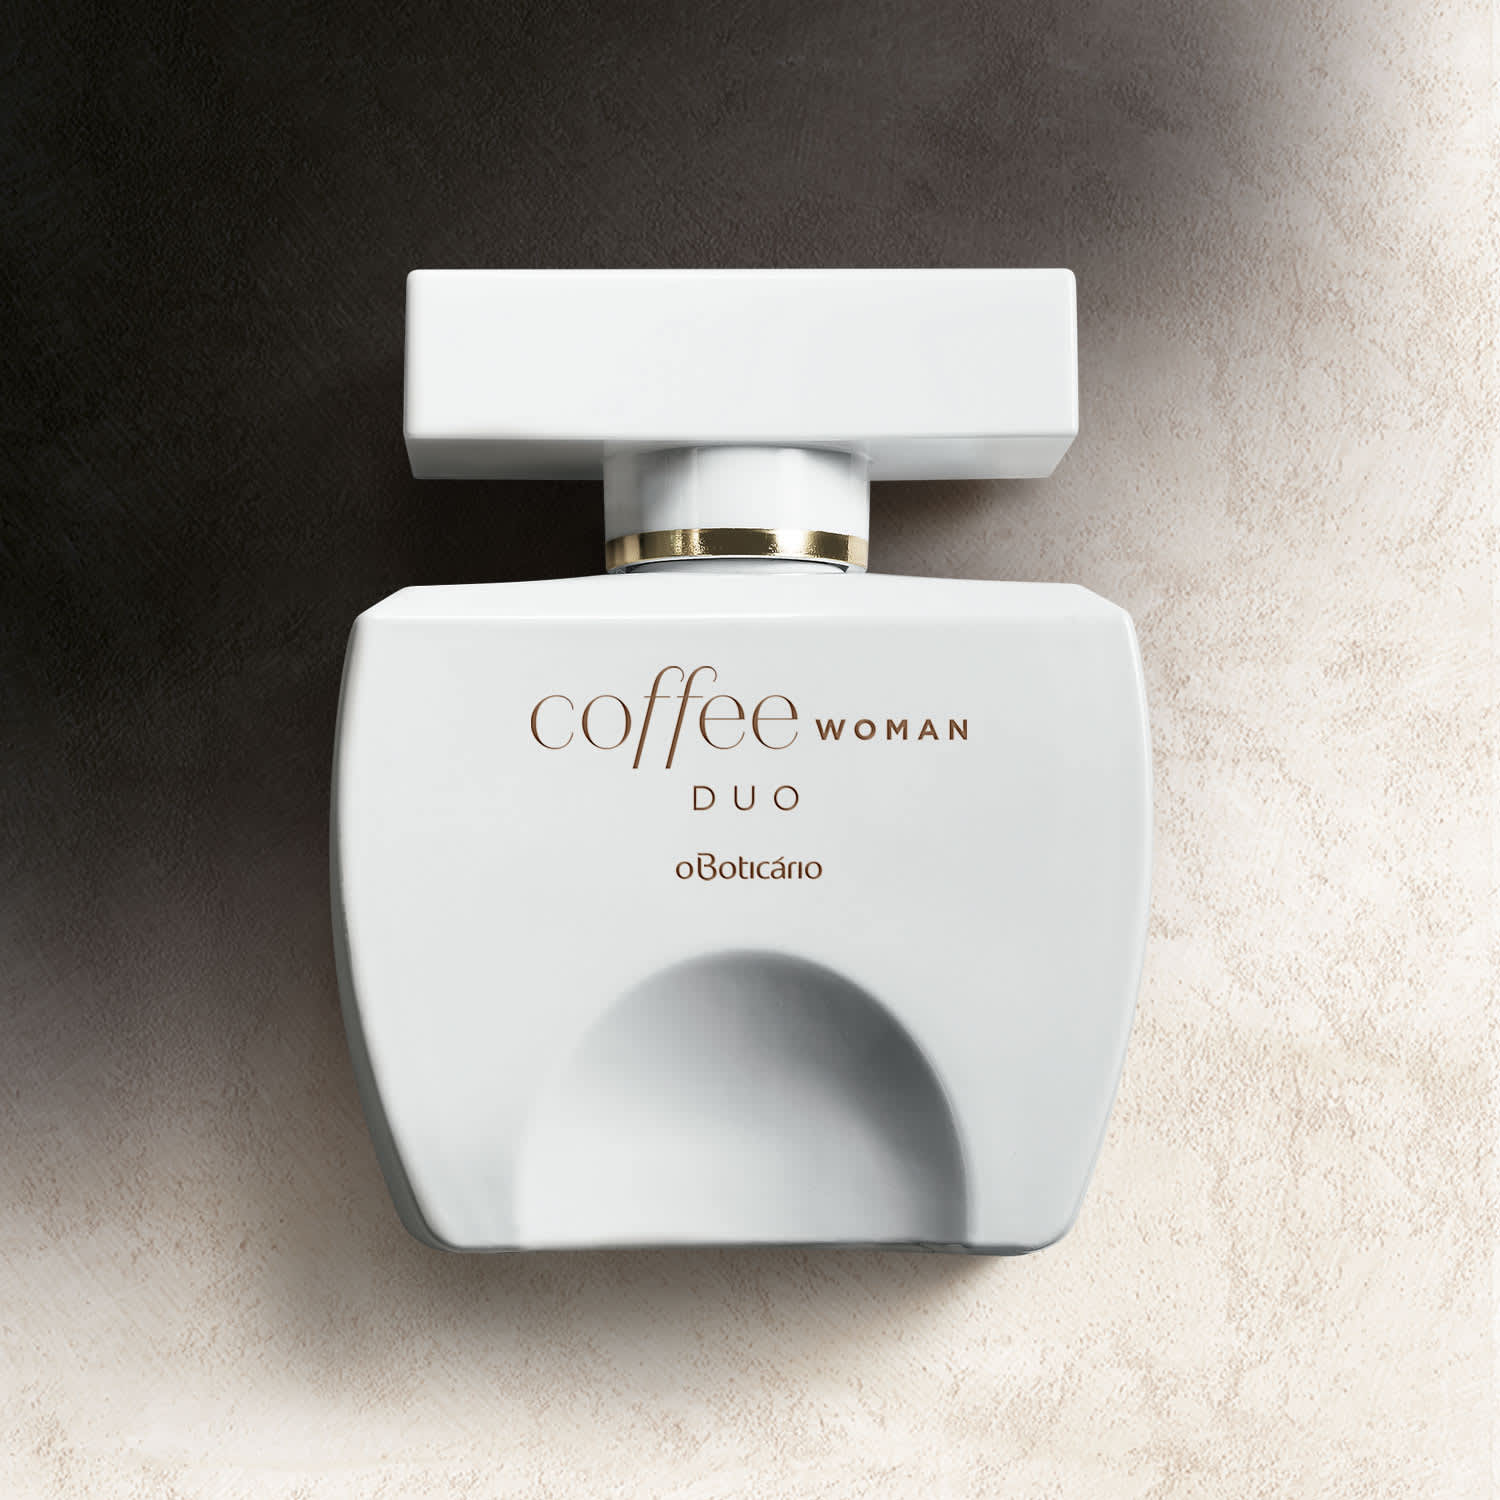 Coffee Woman Duo Desodorante Colônia, 100ml